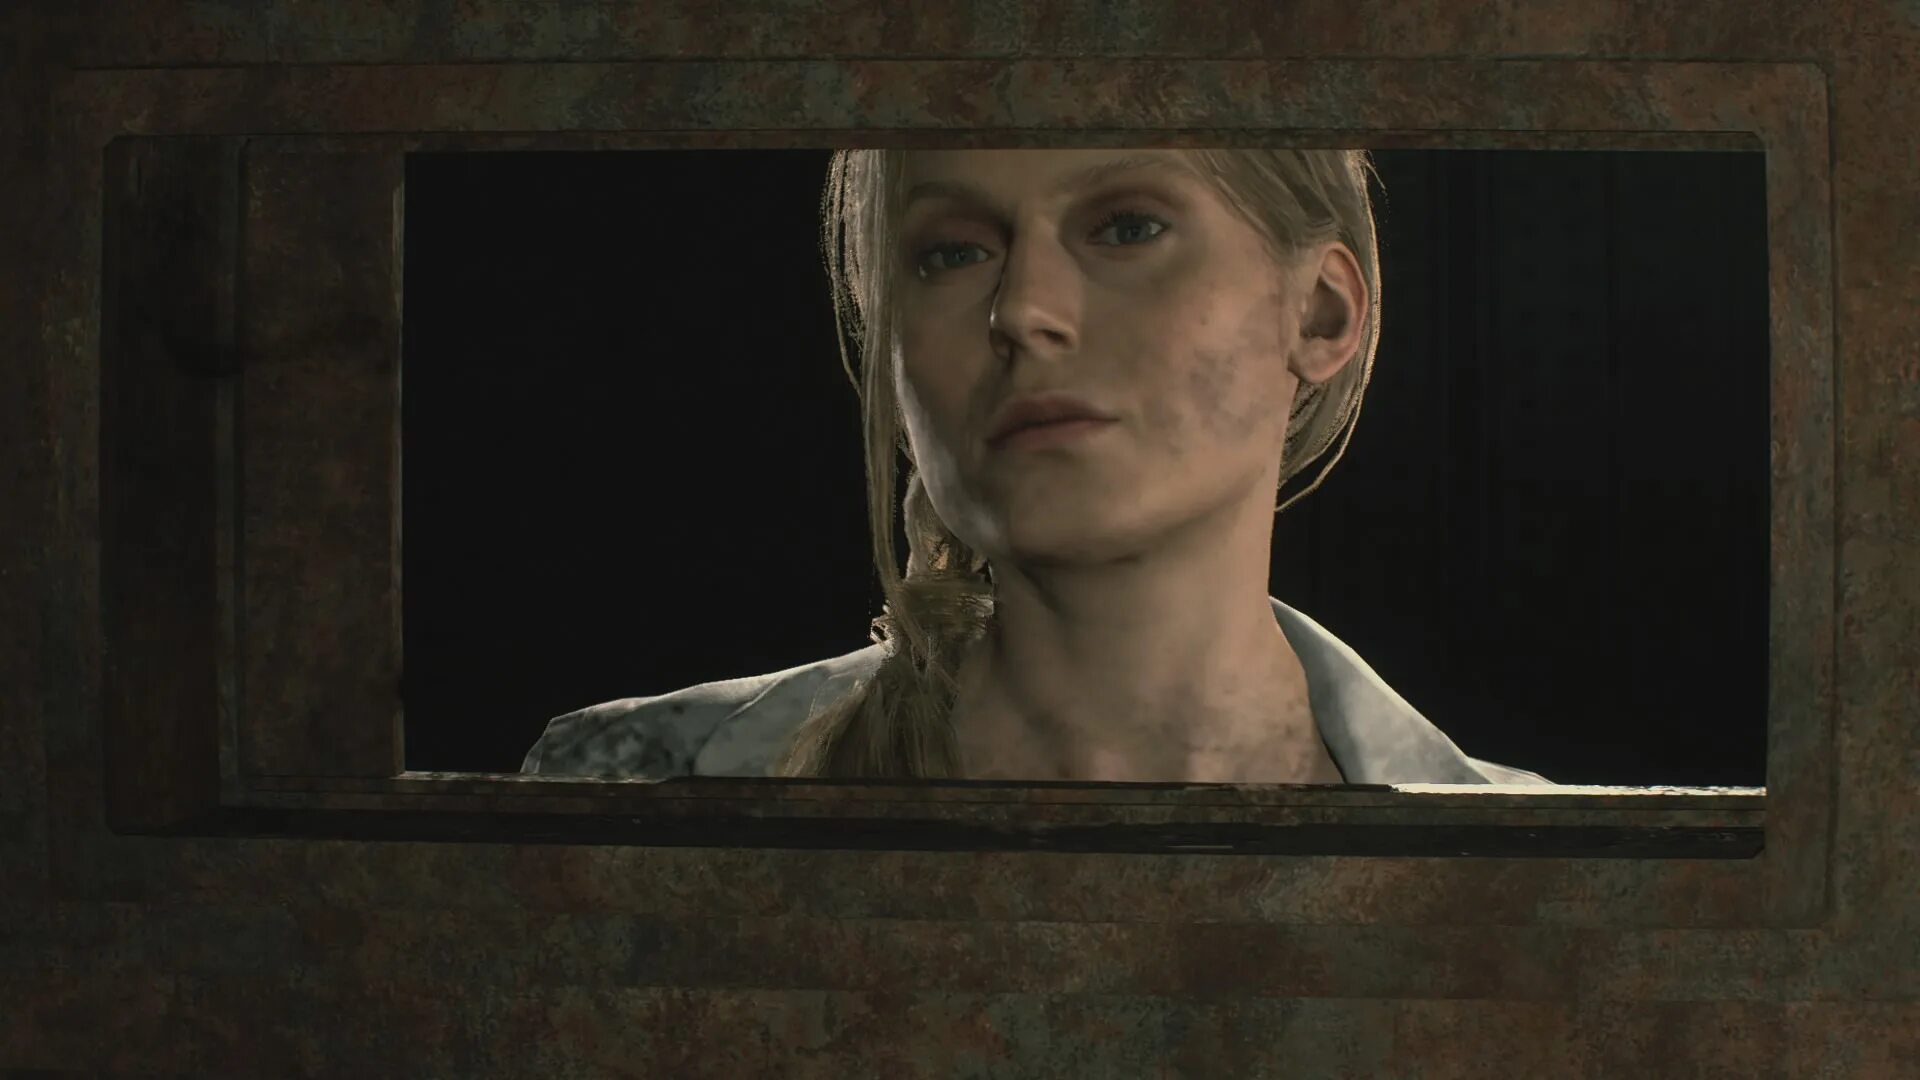 Аннет ларссон видео допроса. Аннет Биркин Resident Evil. Аннет Биркин Resident Evil 2. Аннет Биркин Resident Evil 2 Remake. Resident Evil 2 Remake Annette Birkin.